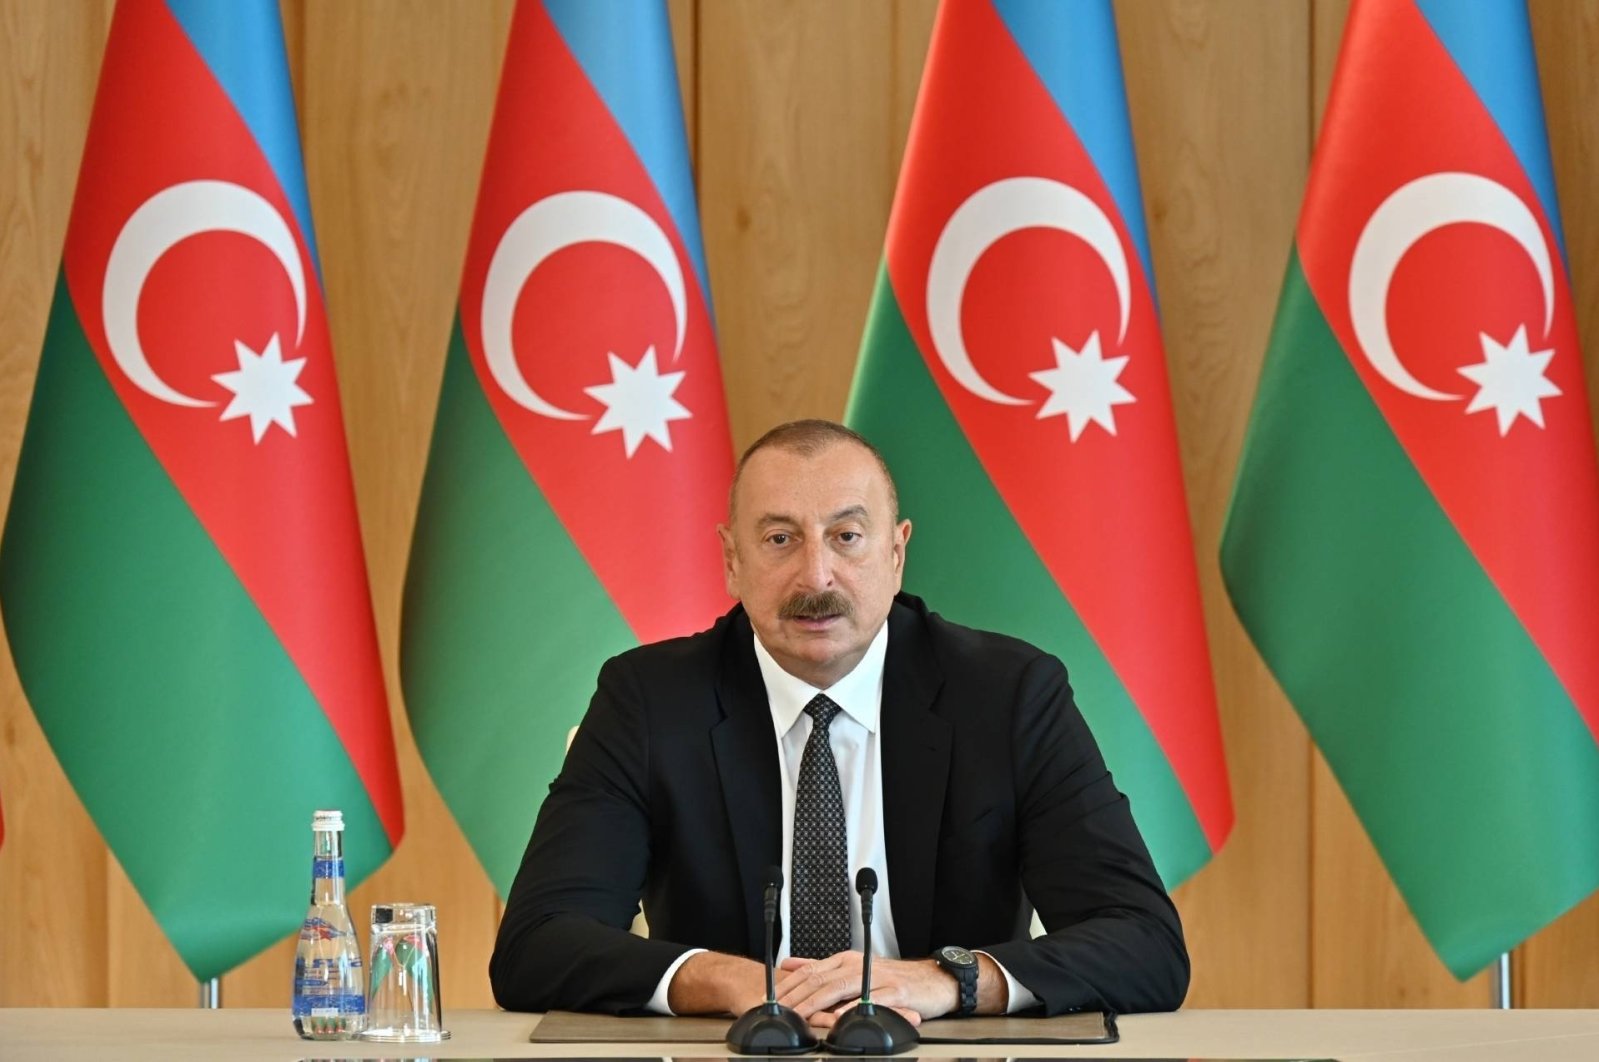 Azerbaijan&#039;s President Ilham Aliyev is seen during a speech in Baku, Azerbaijan, July 16, 2022. (IHA Photo)